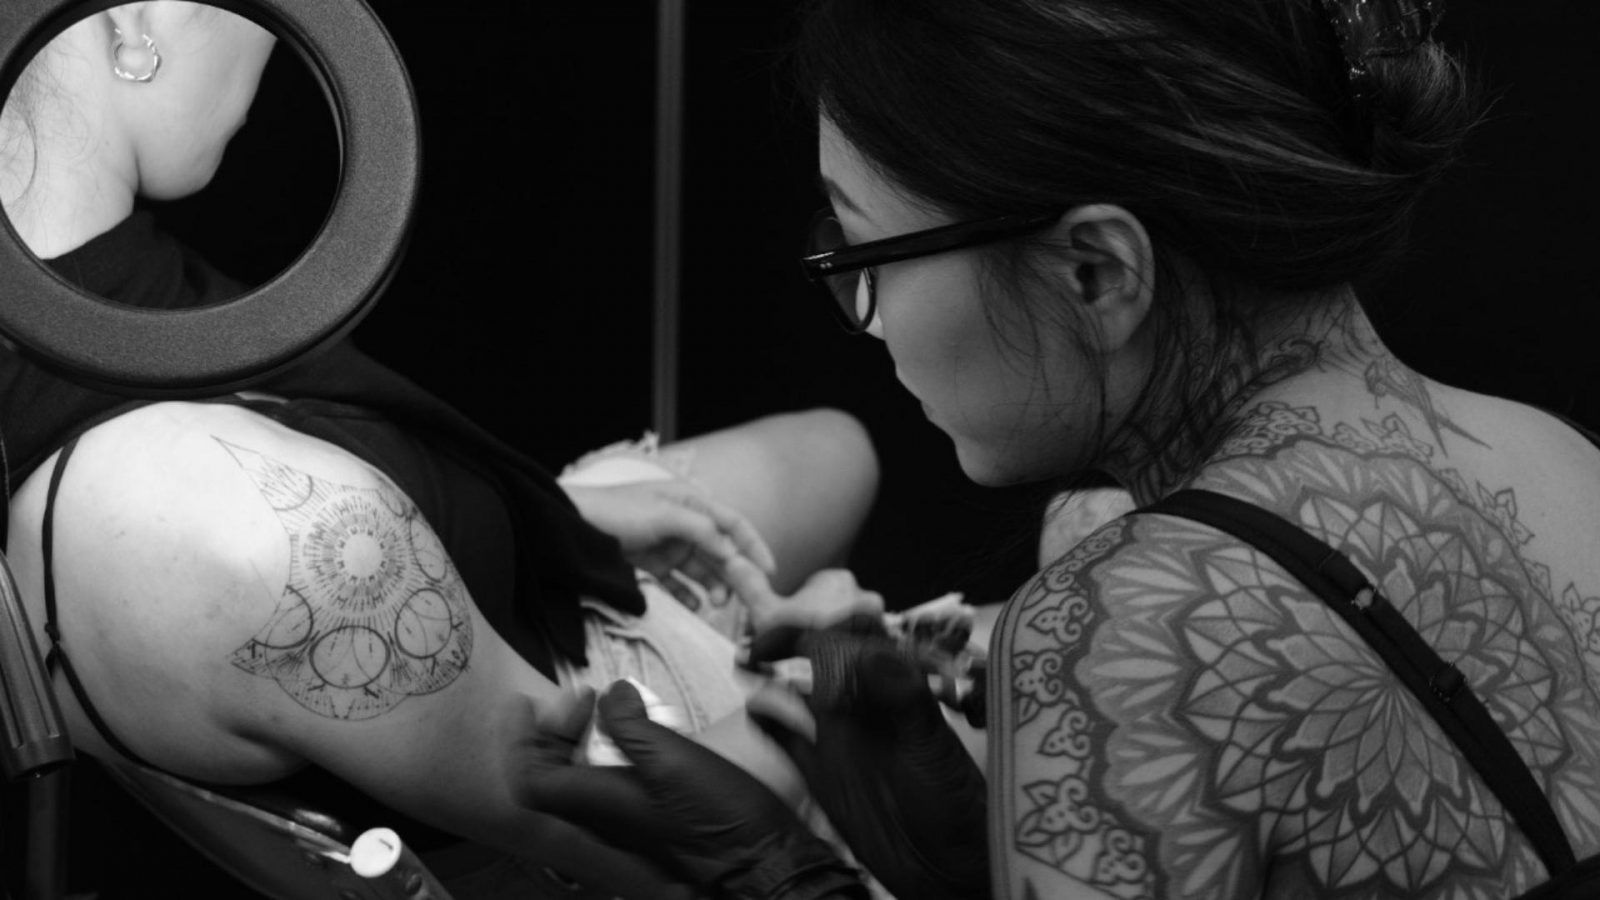 27 Questions: Yeeki Lo, tattoo artist and founder of Yeeki Tattoo